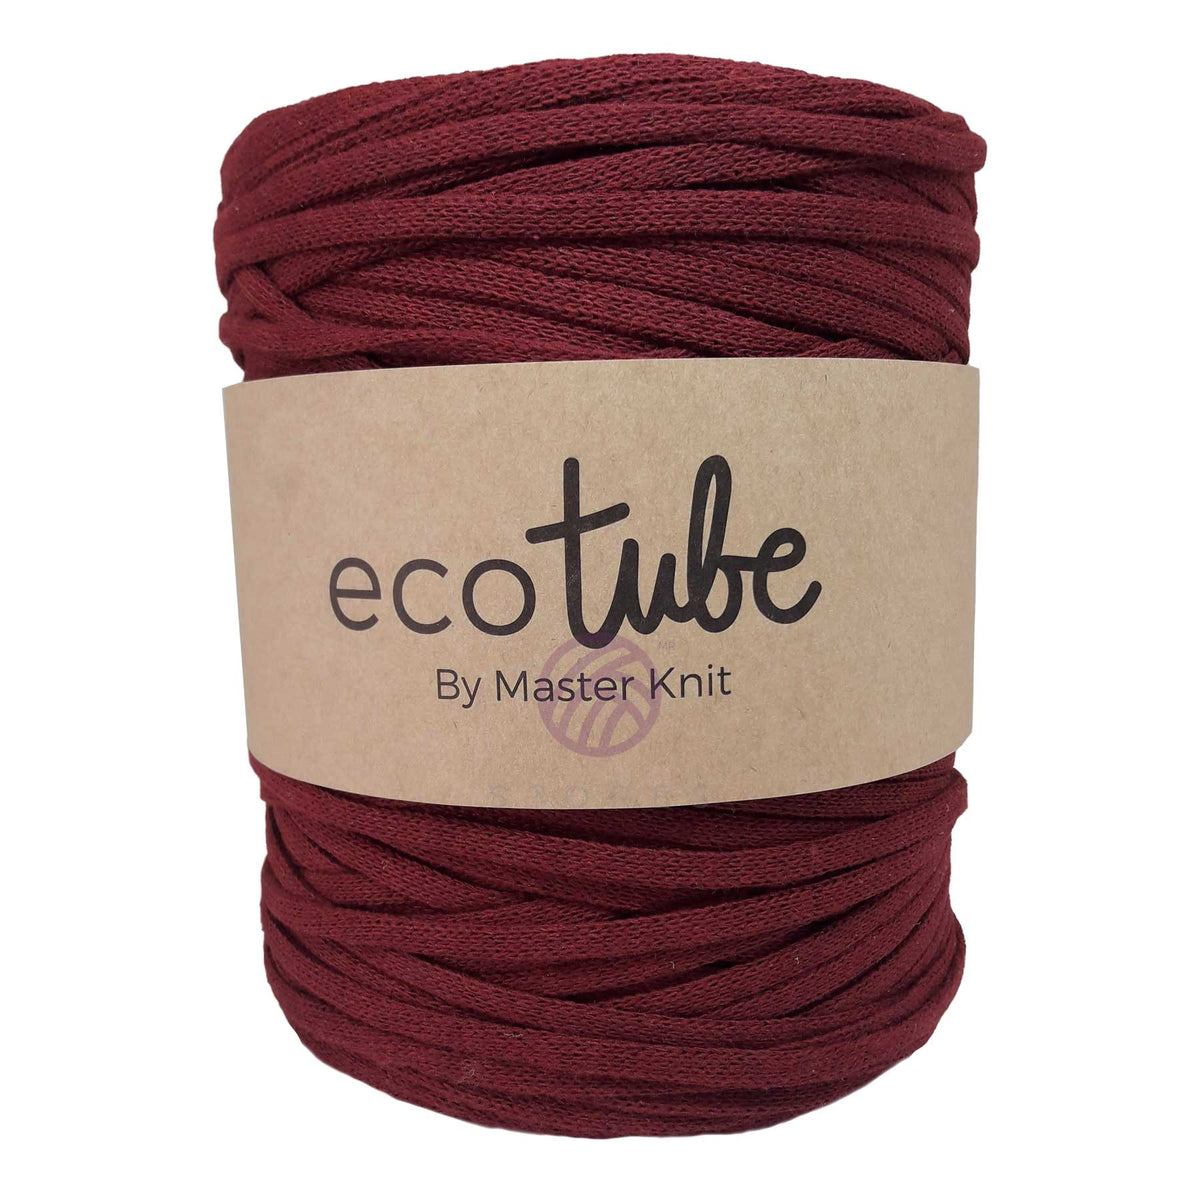 ECO TUBE - Crochetstores9380-627